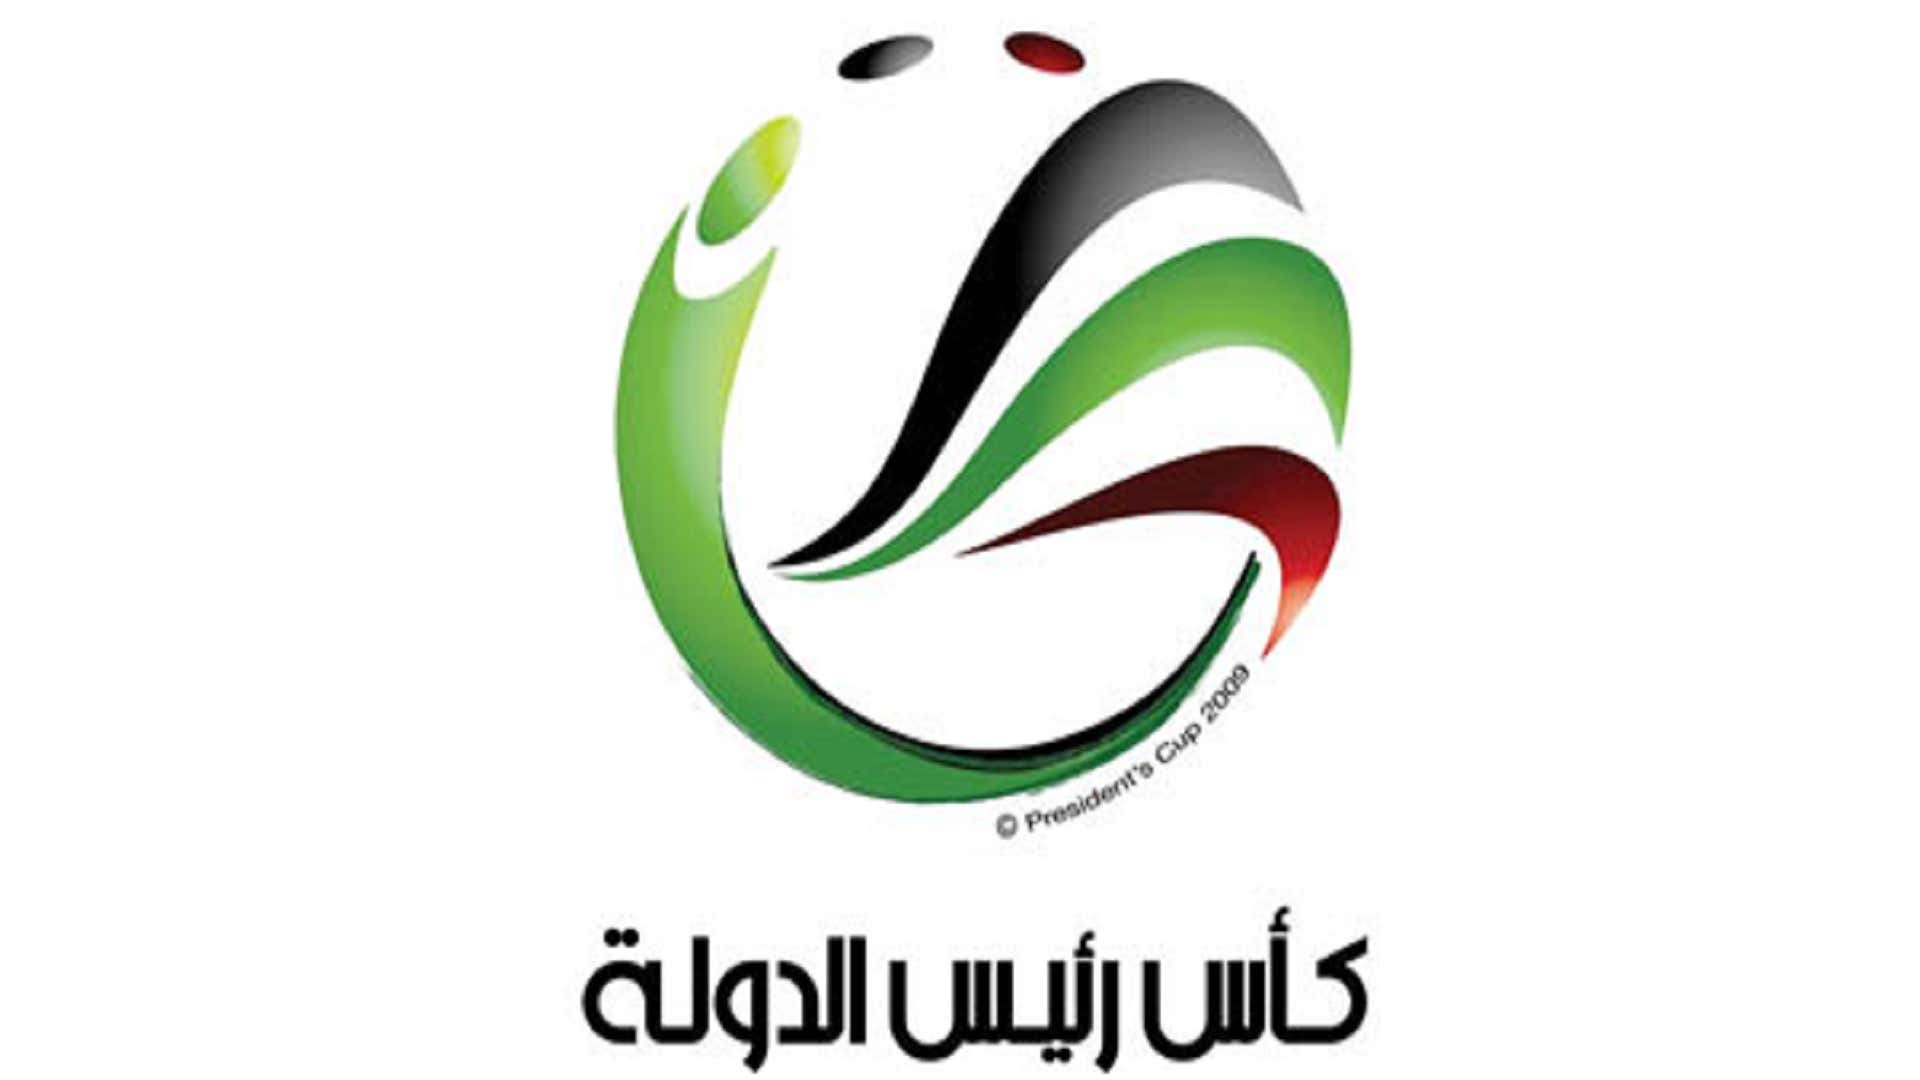 UAE President's Cup كأس رئيس الإمارات